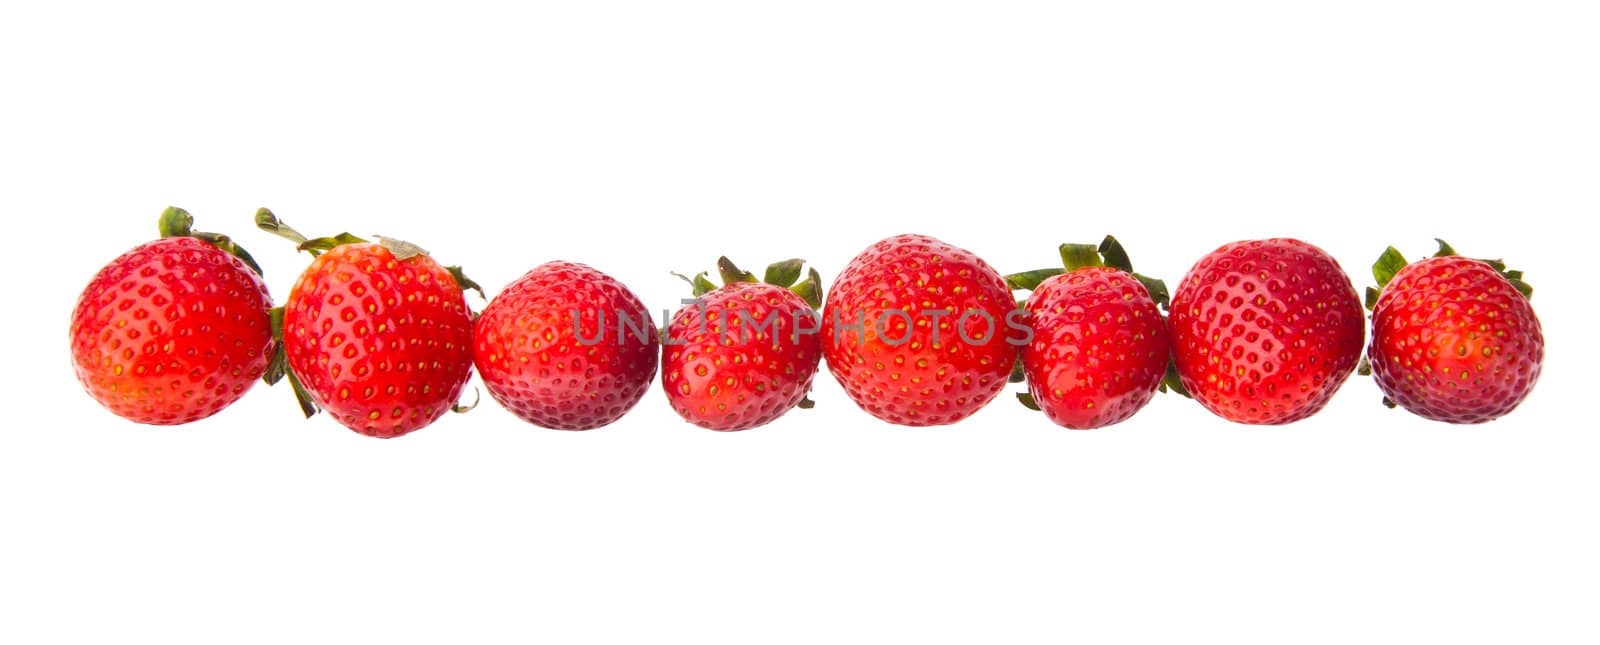 strawberry, fresh red strawberry on background by heinteh